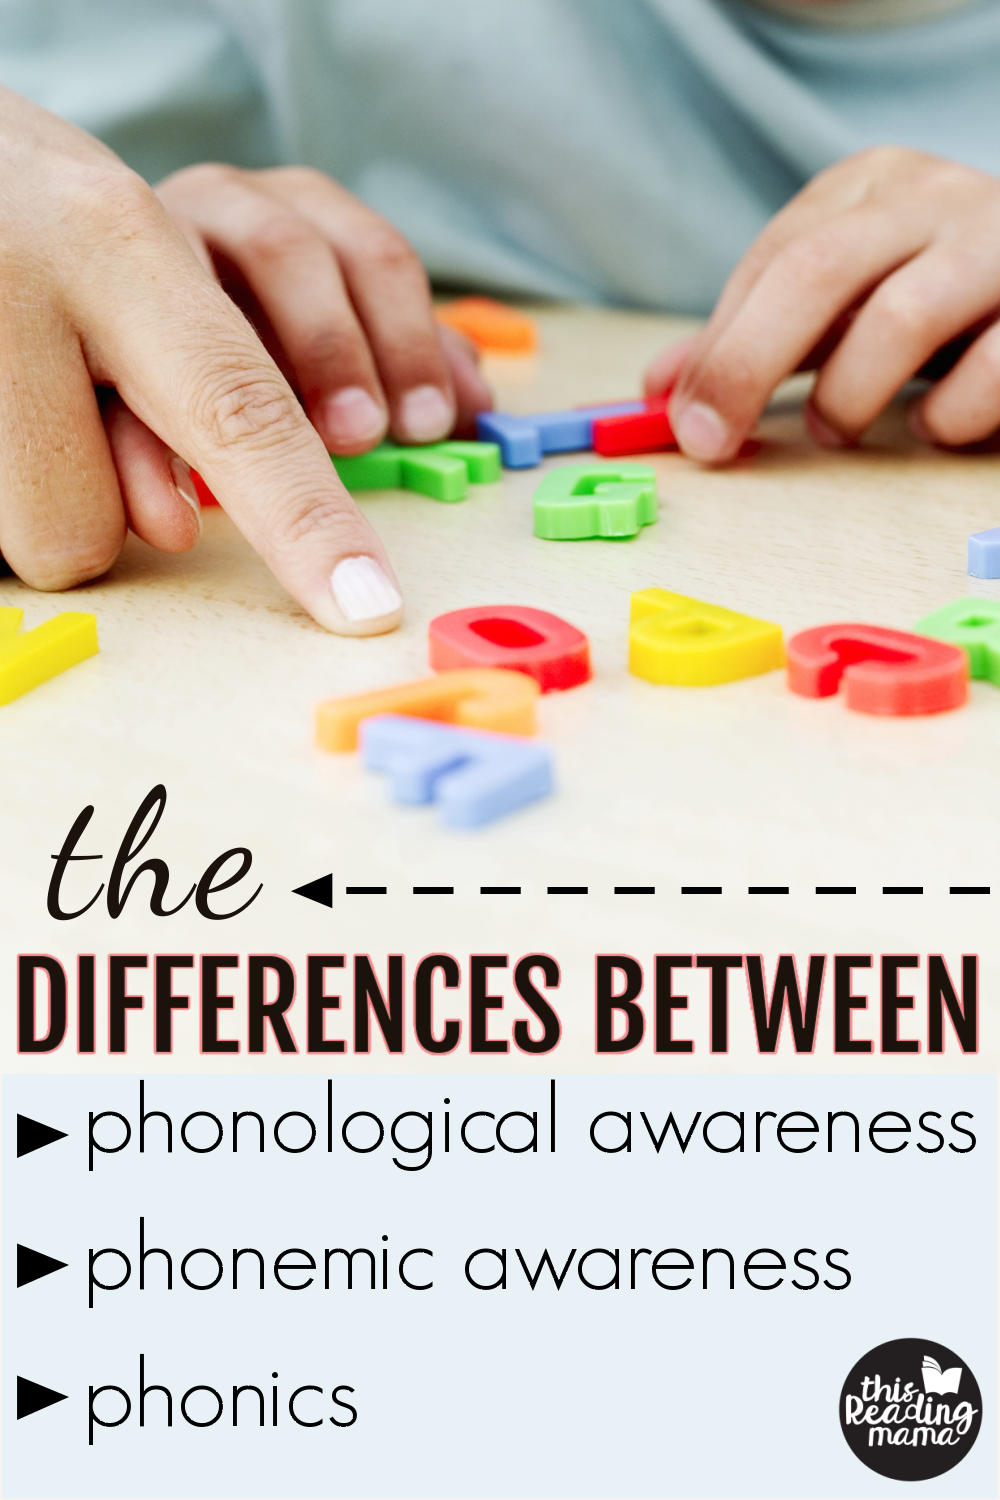 phonological-awareness-phonemic-awareness-phonics-this-reading-mama